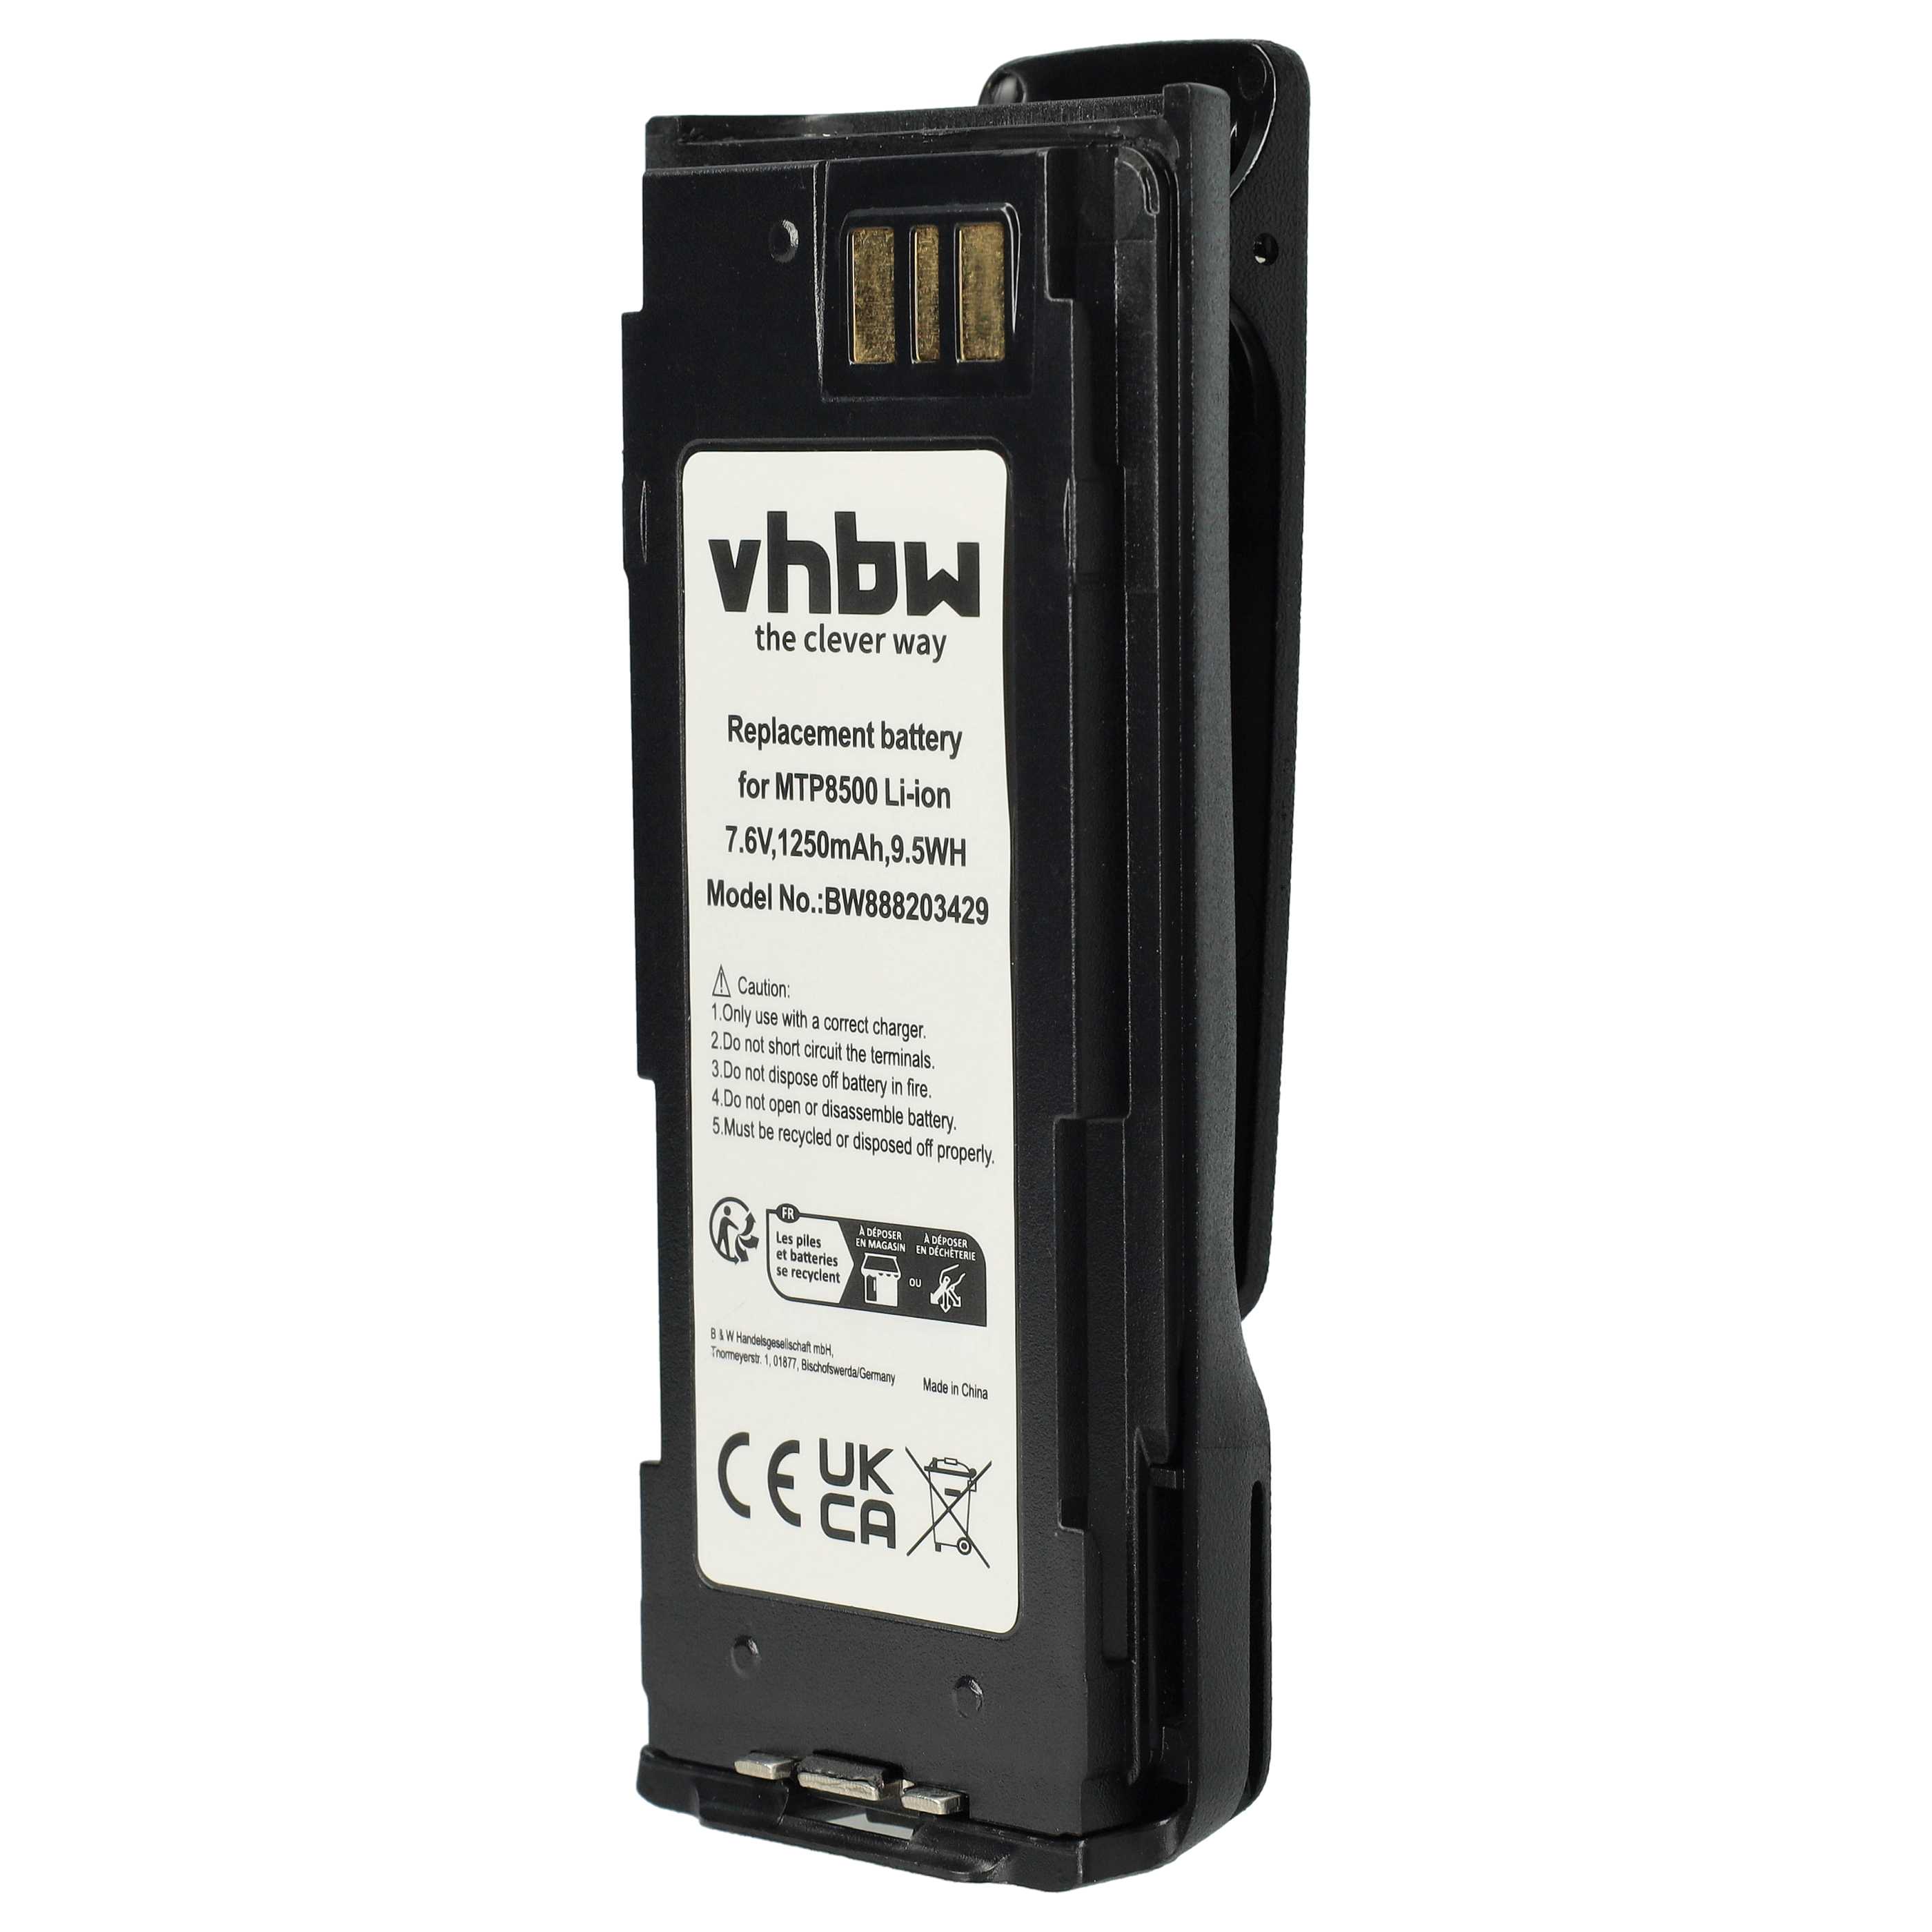 Akumulator do radiotelefonu zamiennik Motorola NNTN8570A, NNTN8570 - 1250 mAh 7,6 V Li-Ion + klips na pasek